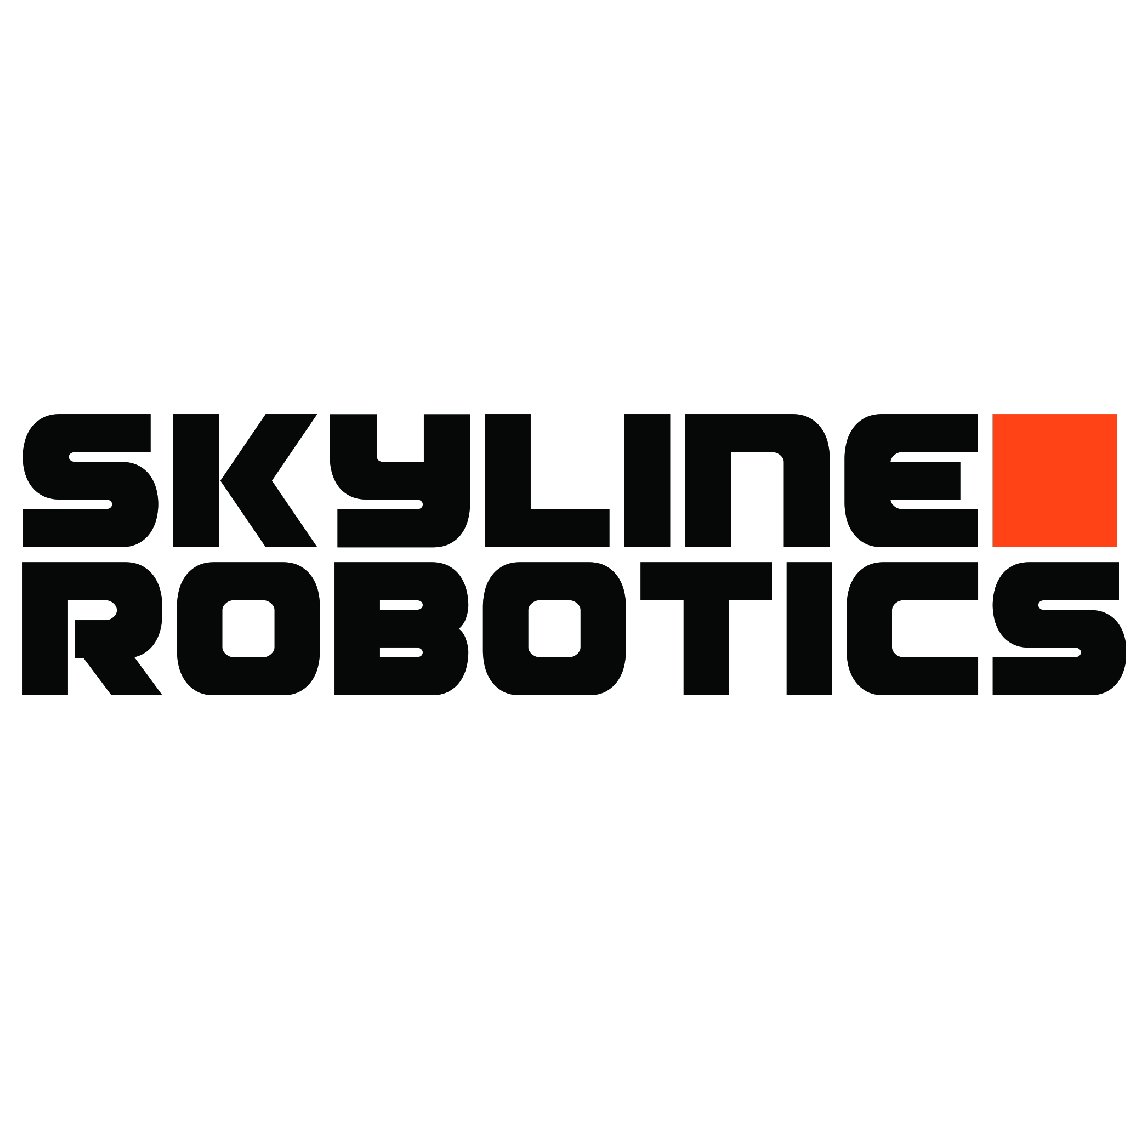 Skyline Robotics